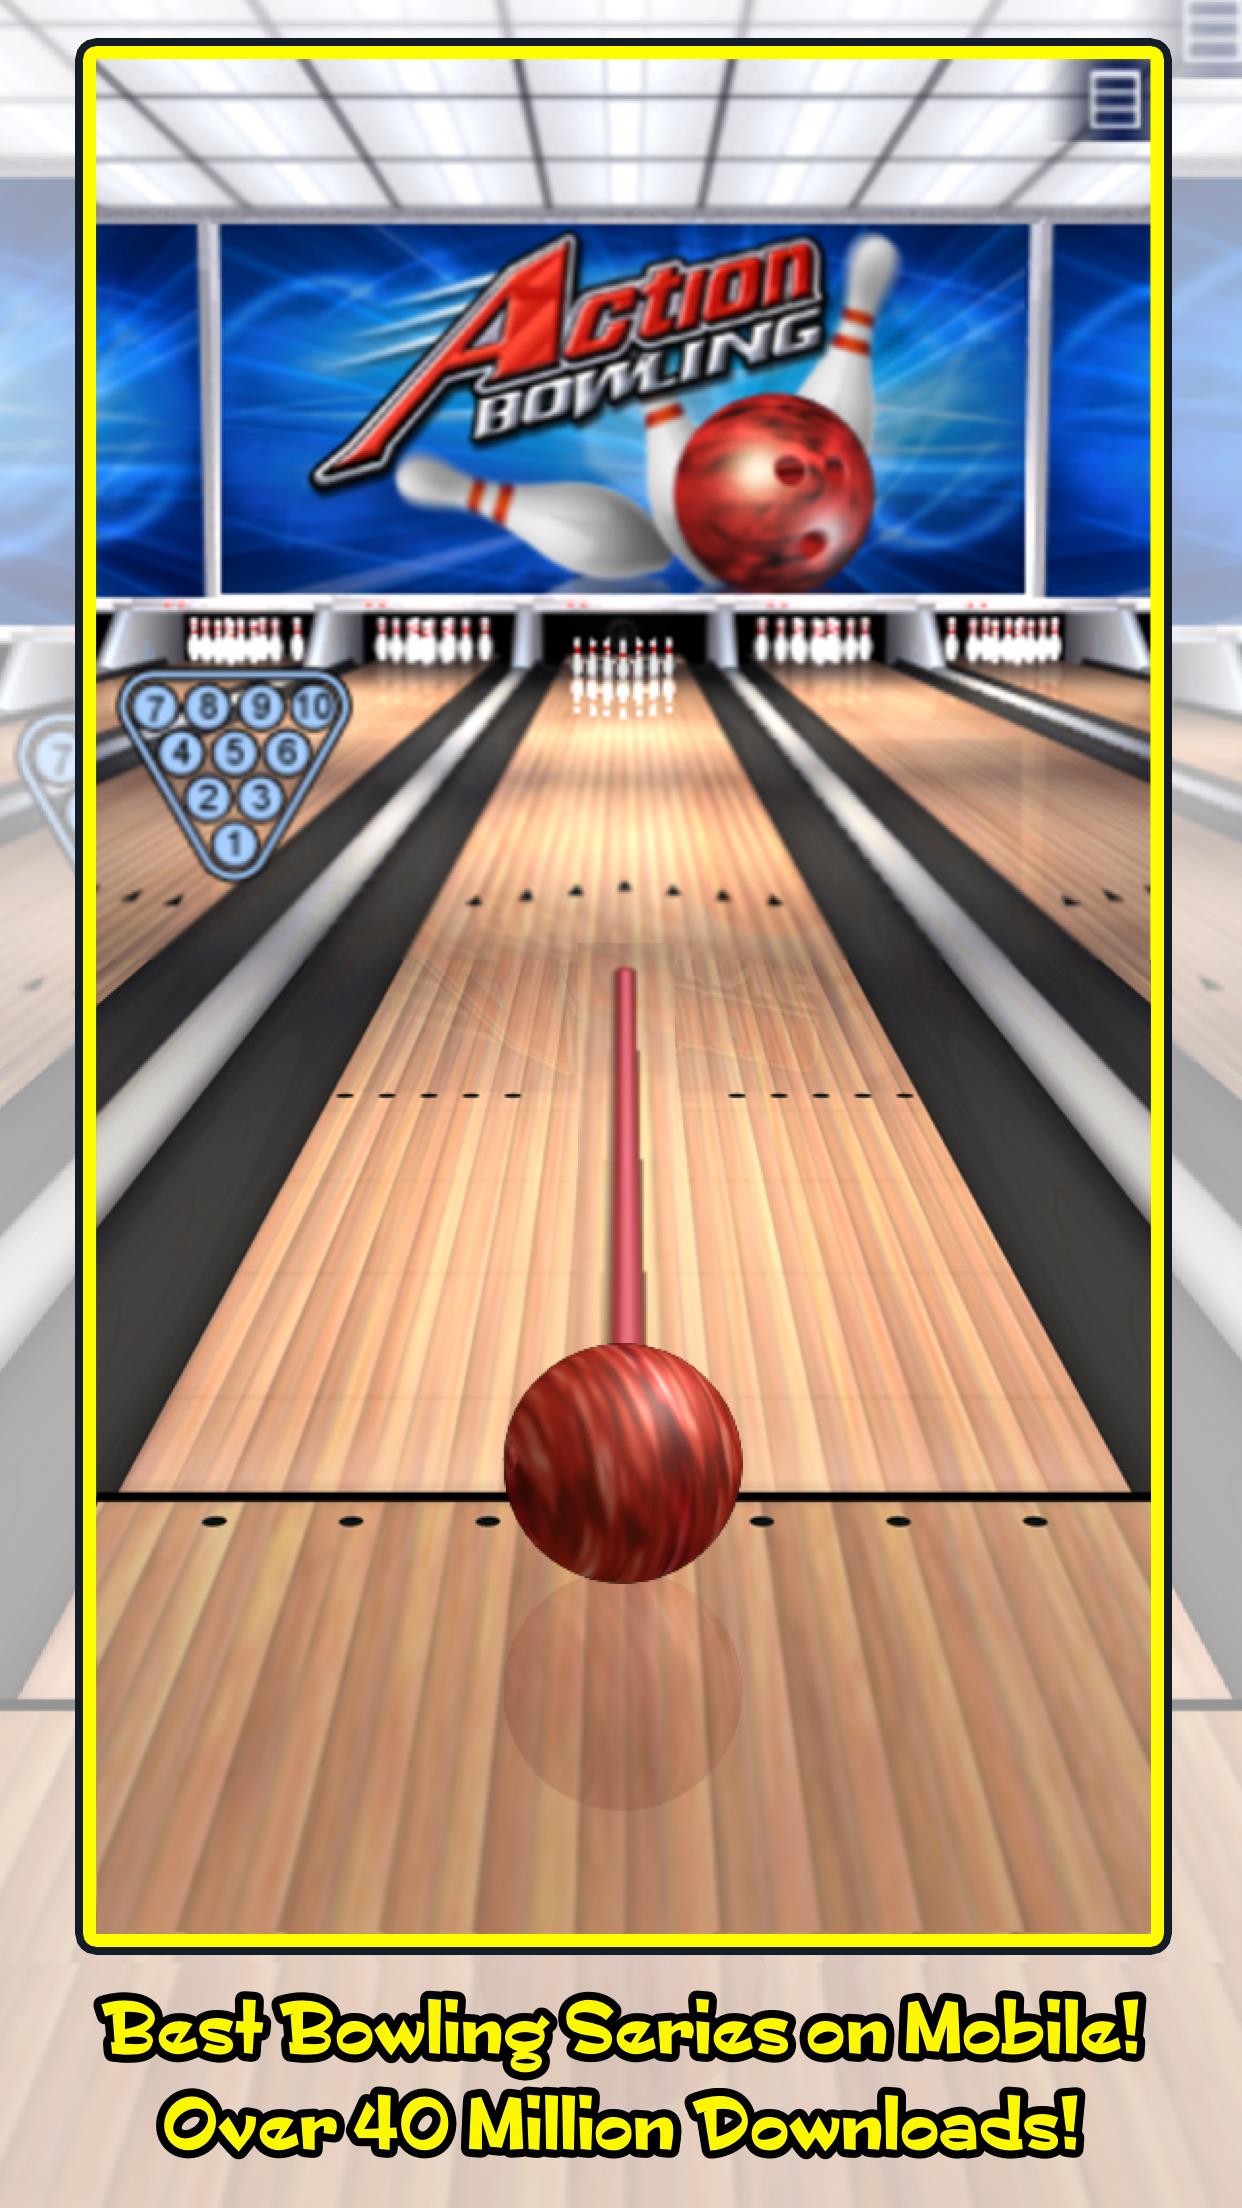 Action Bowling 2 Screenshot 1